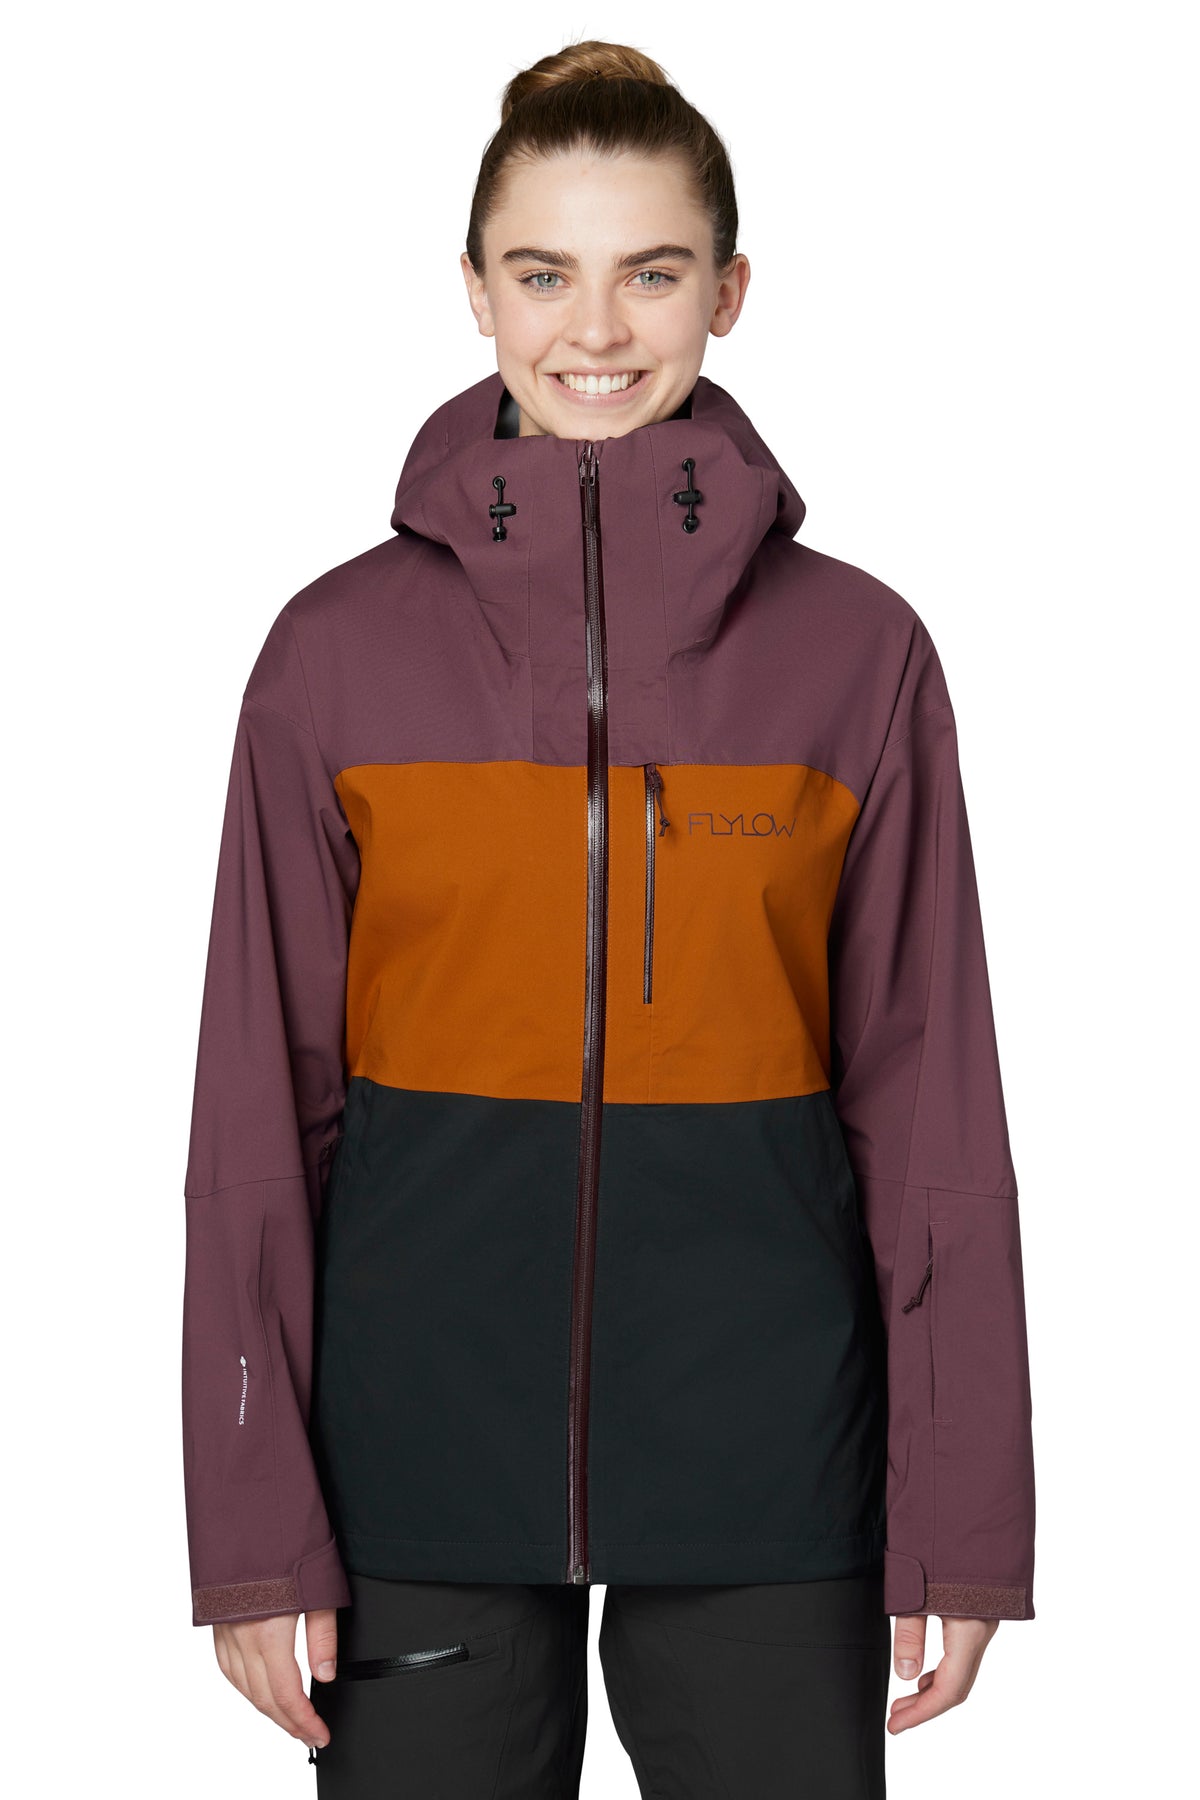 Lucy Jacket - Women's Backcountry Ski Jacket | Flylow – Flylow Gear